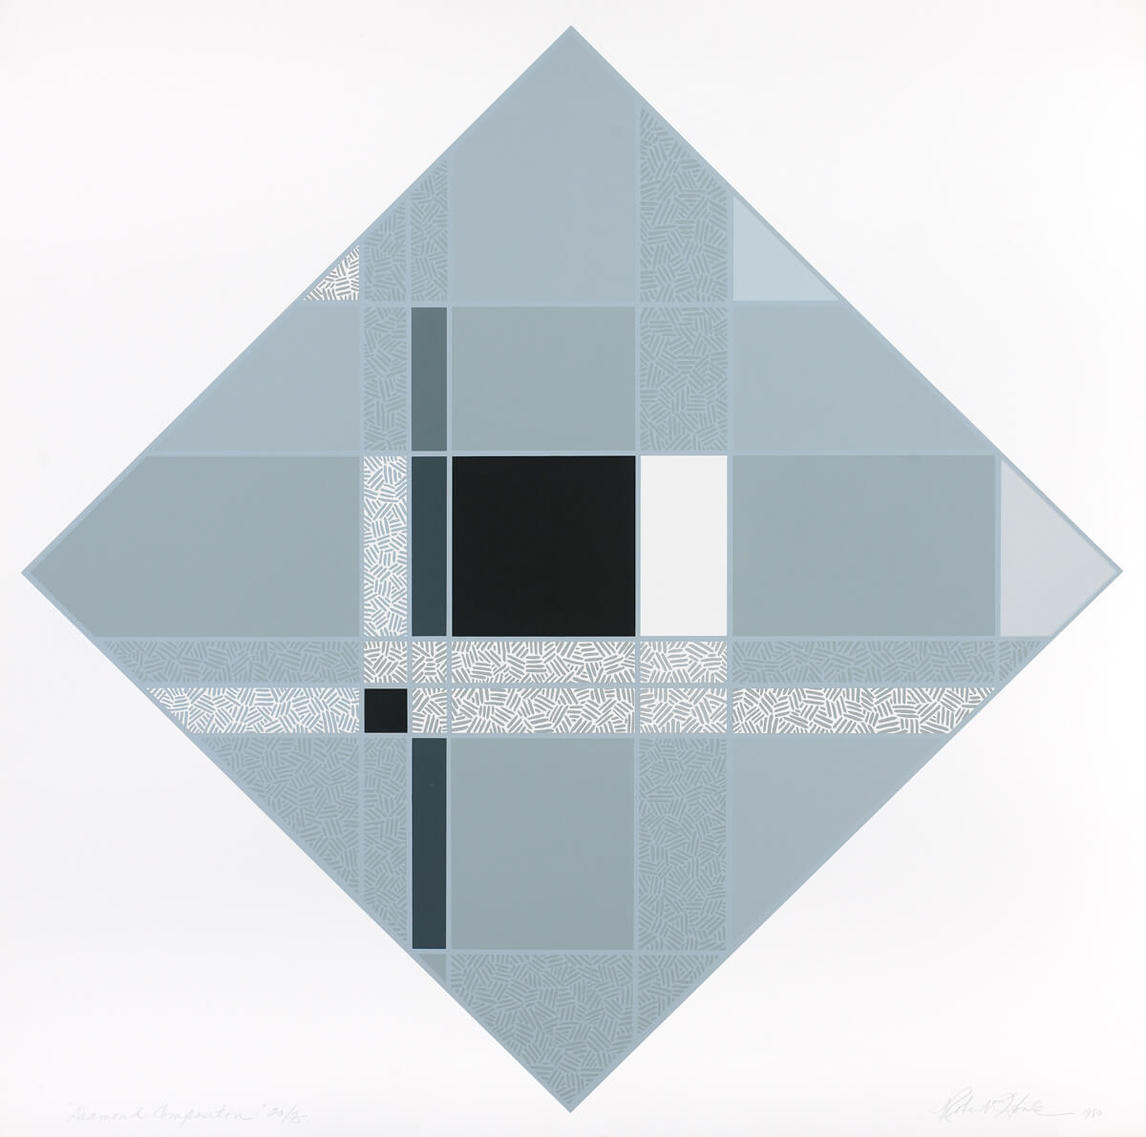 Robert Houle, Diamond Composition, 1980